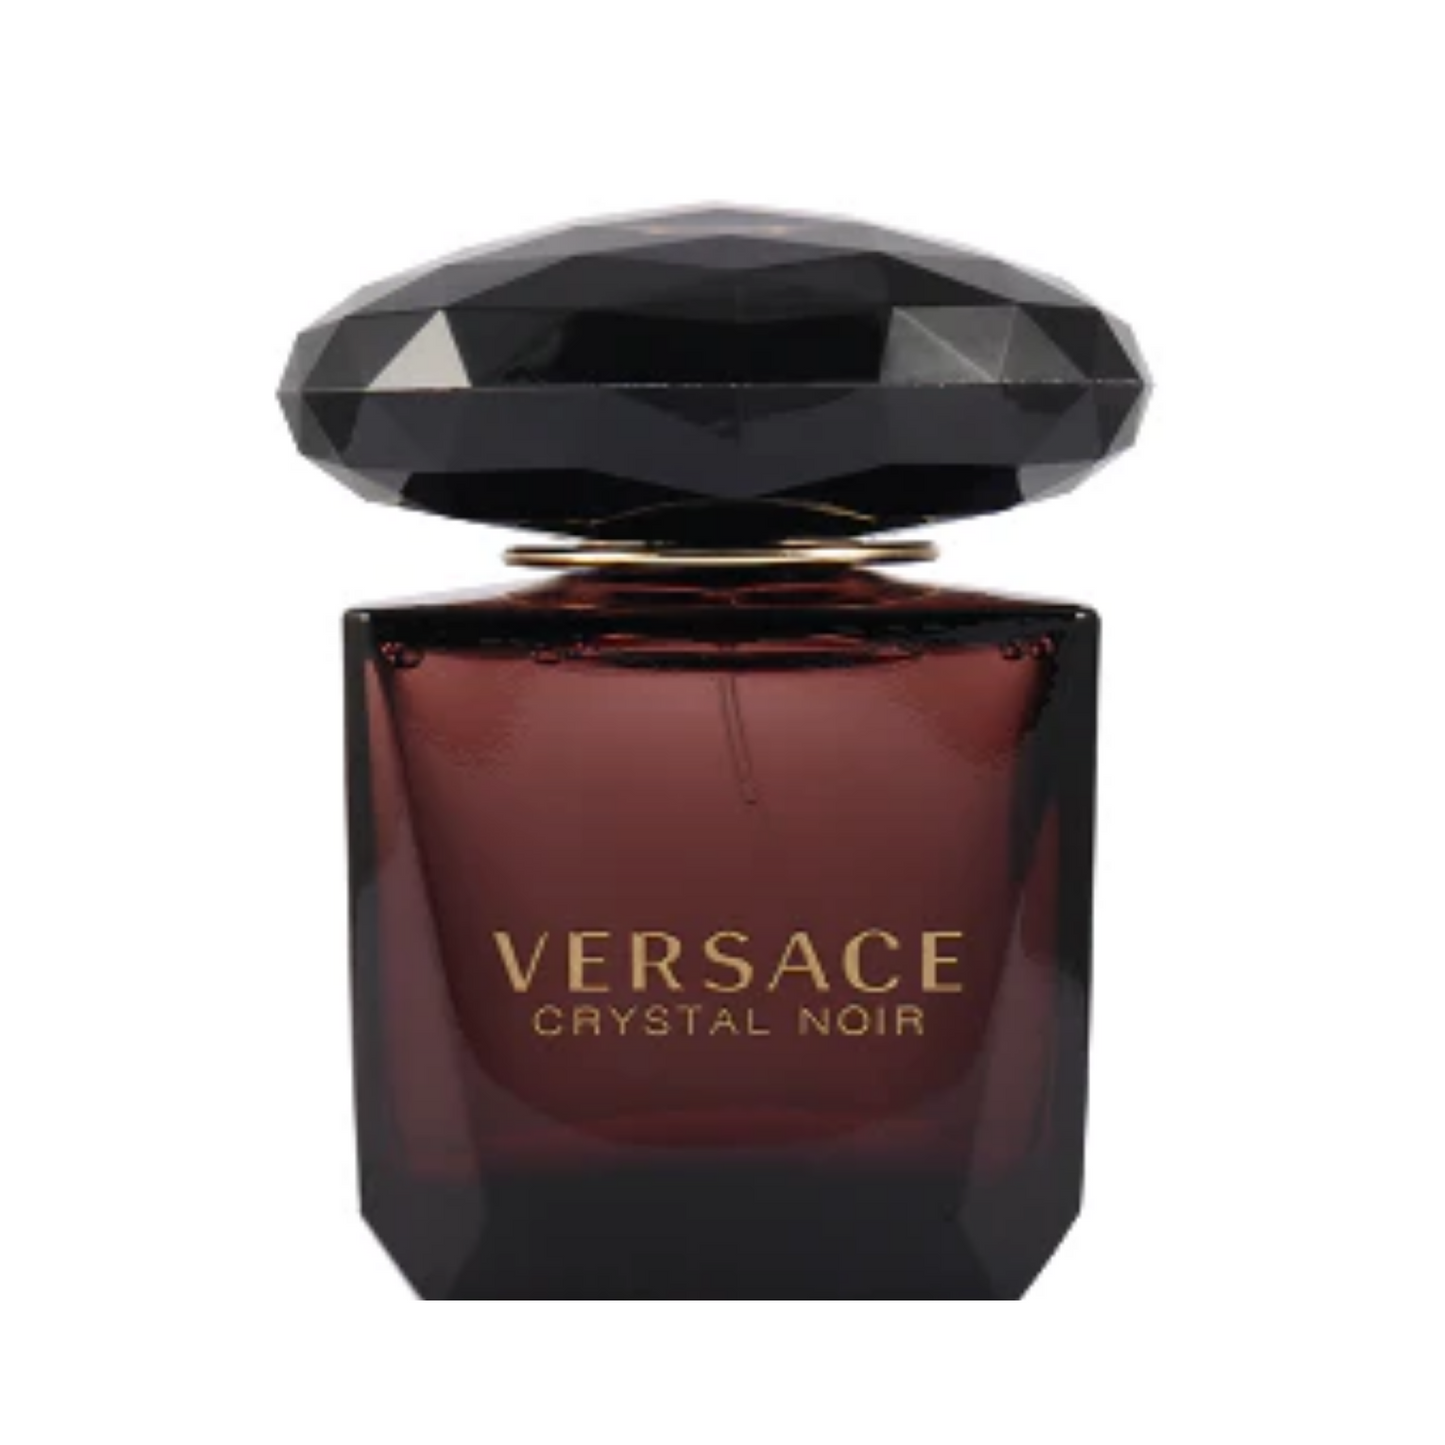 Versace Crystal Noir type Perfume for Women